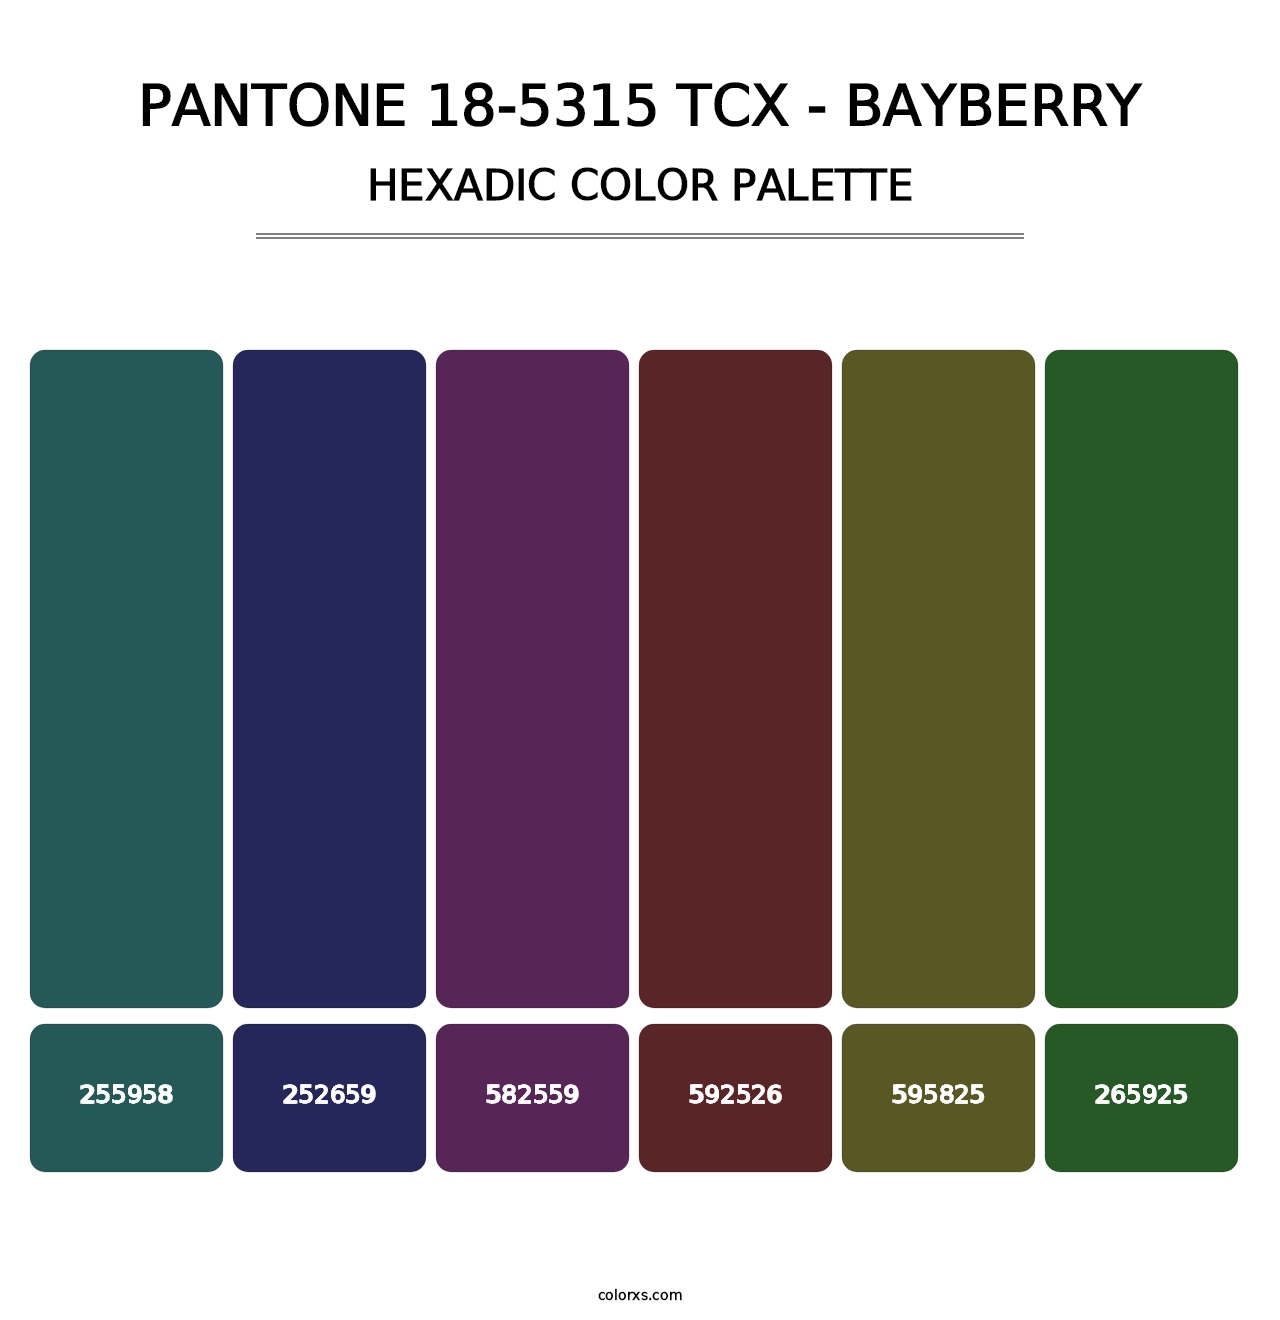 PANTONE 18-5315 TCX - Bayberry - Hexadic Color Palette